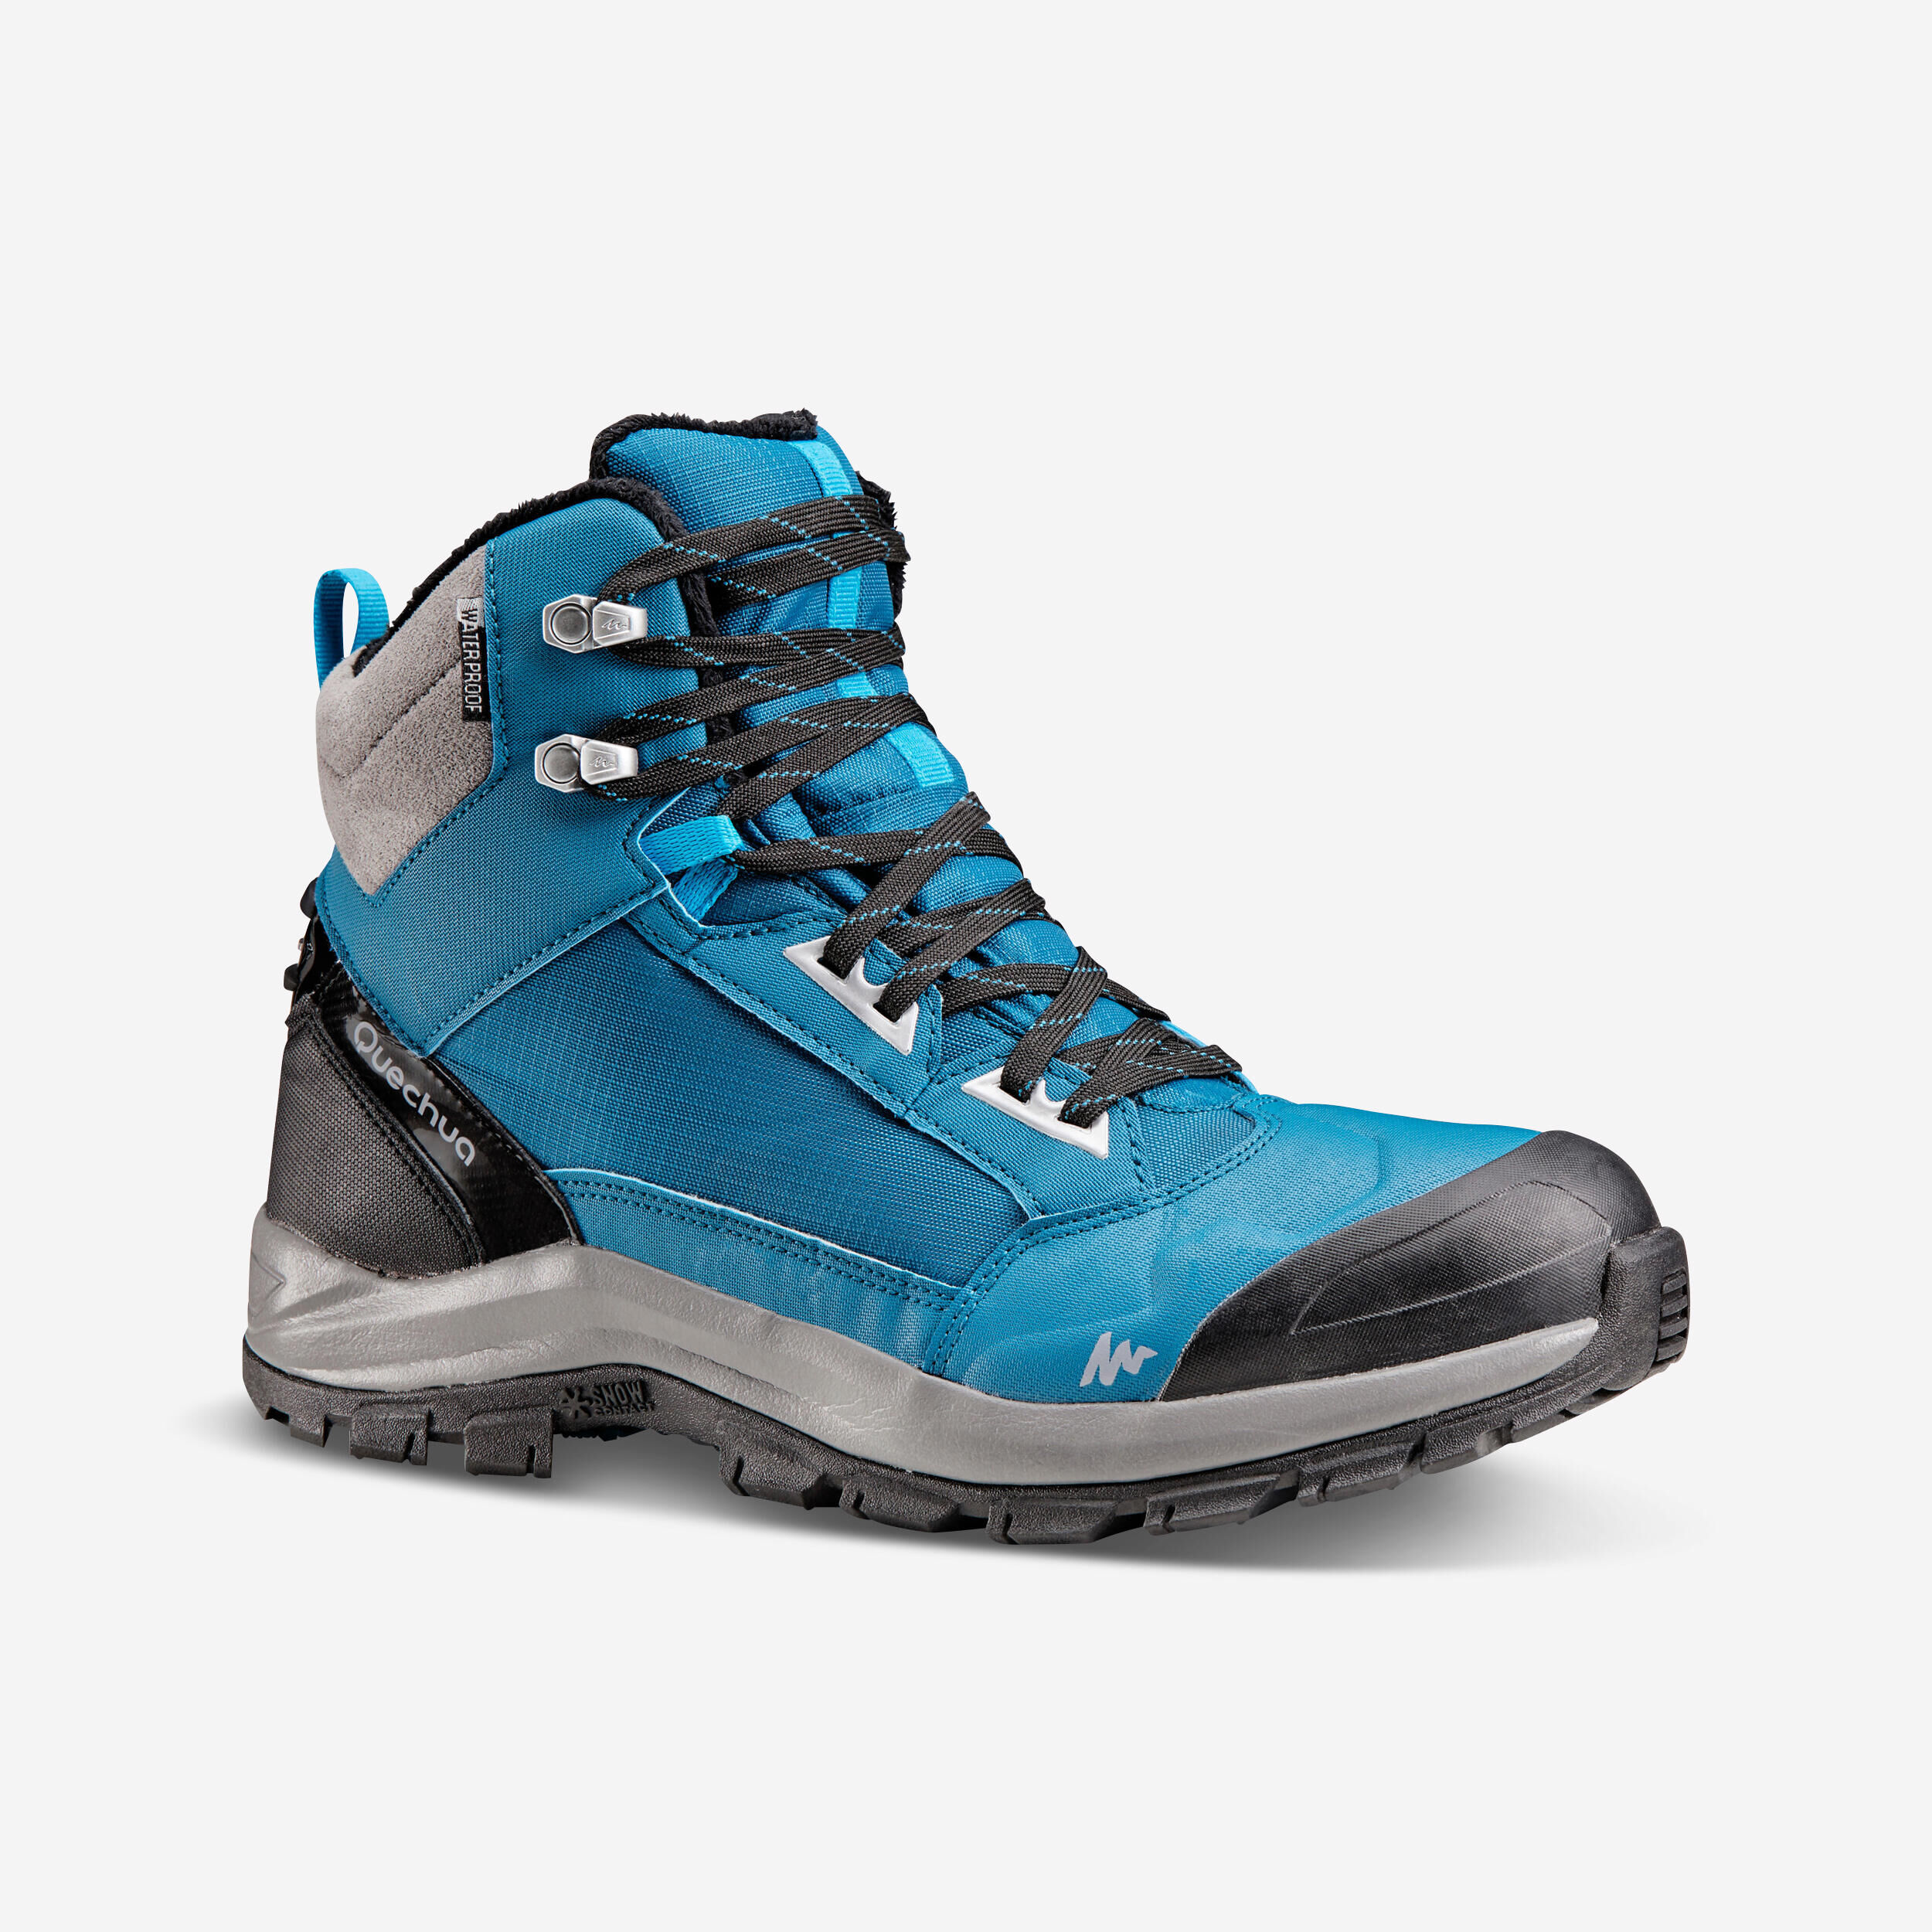 QUECHUA Men’s Warm and Waterproof Hiking Boots - SH500 mountain MID